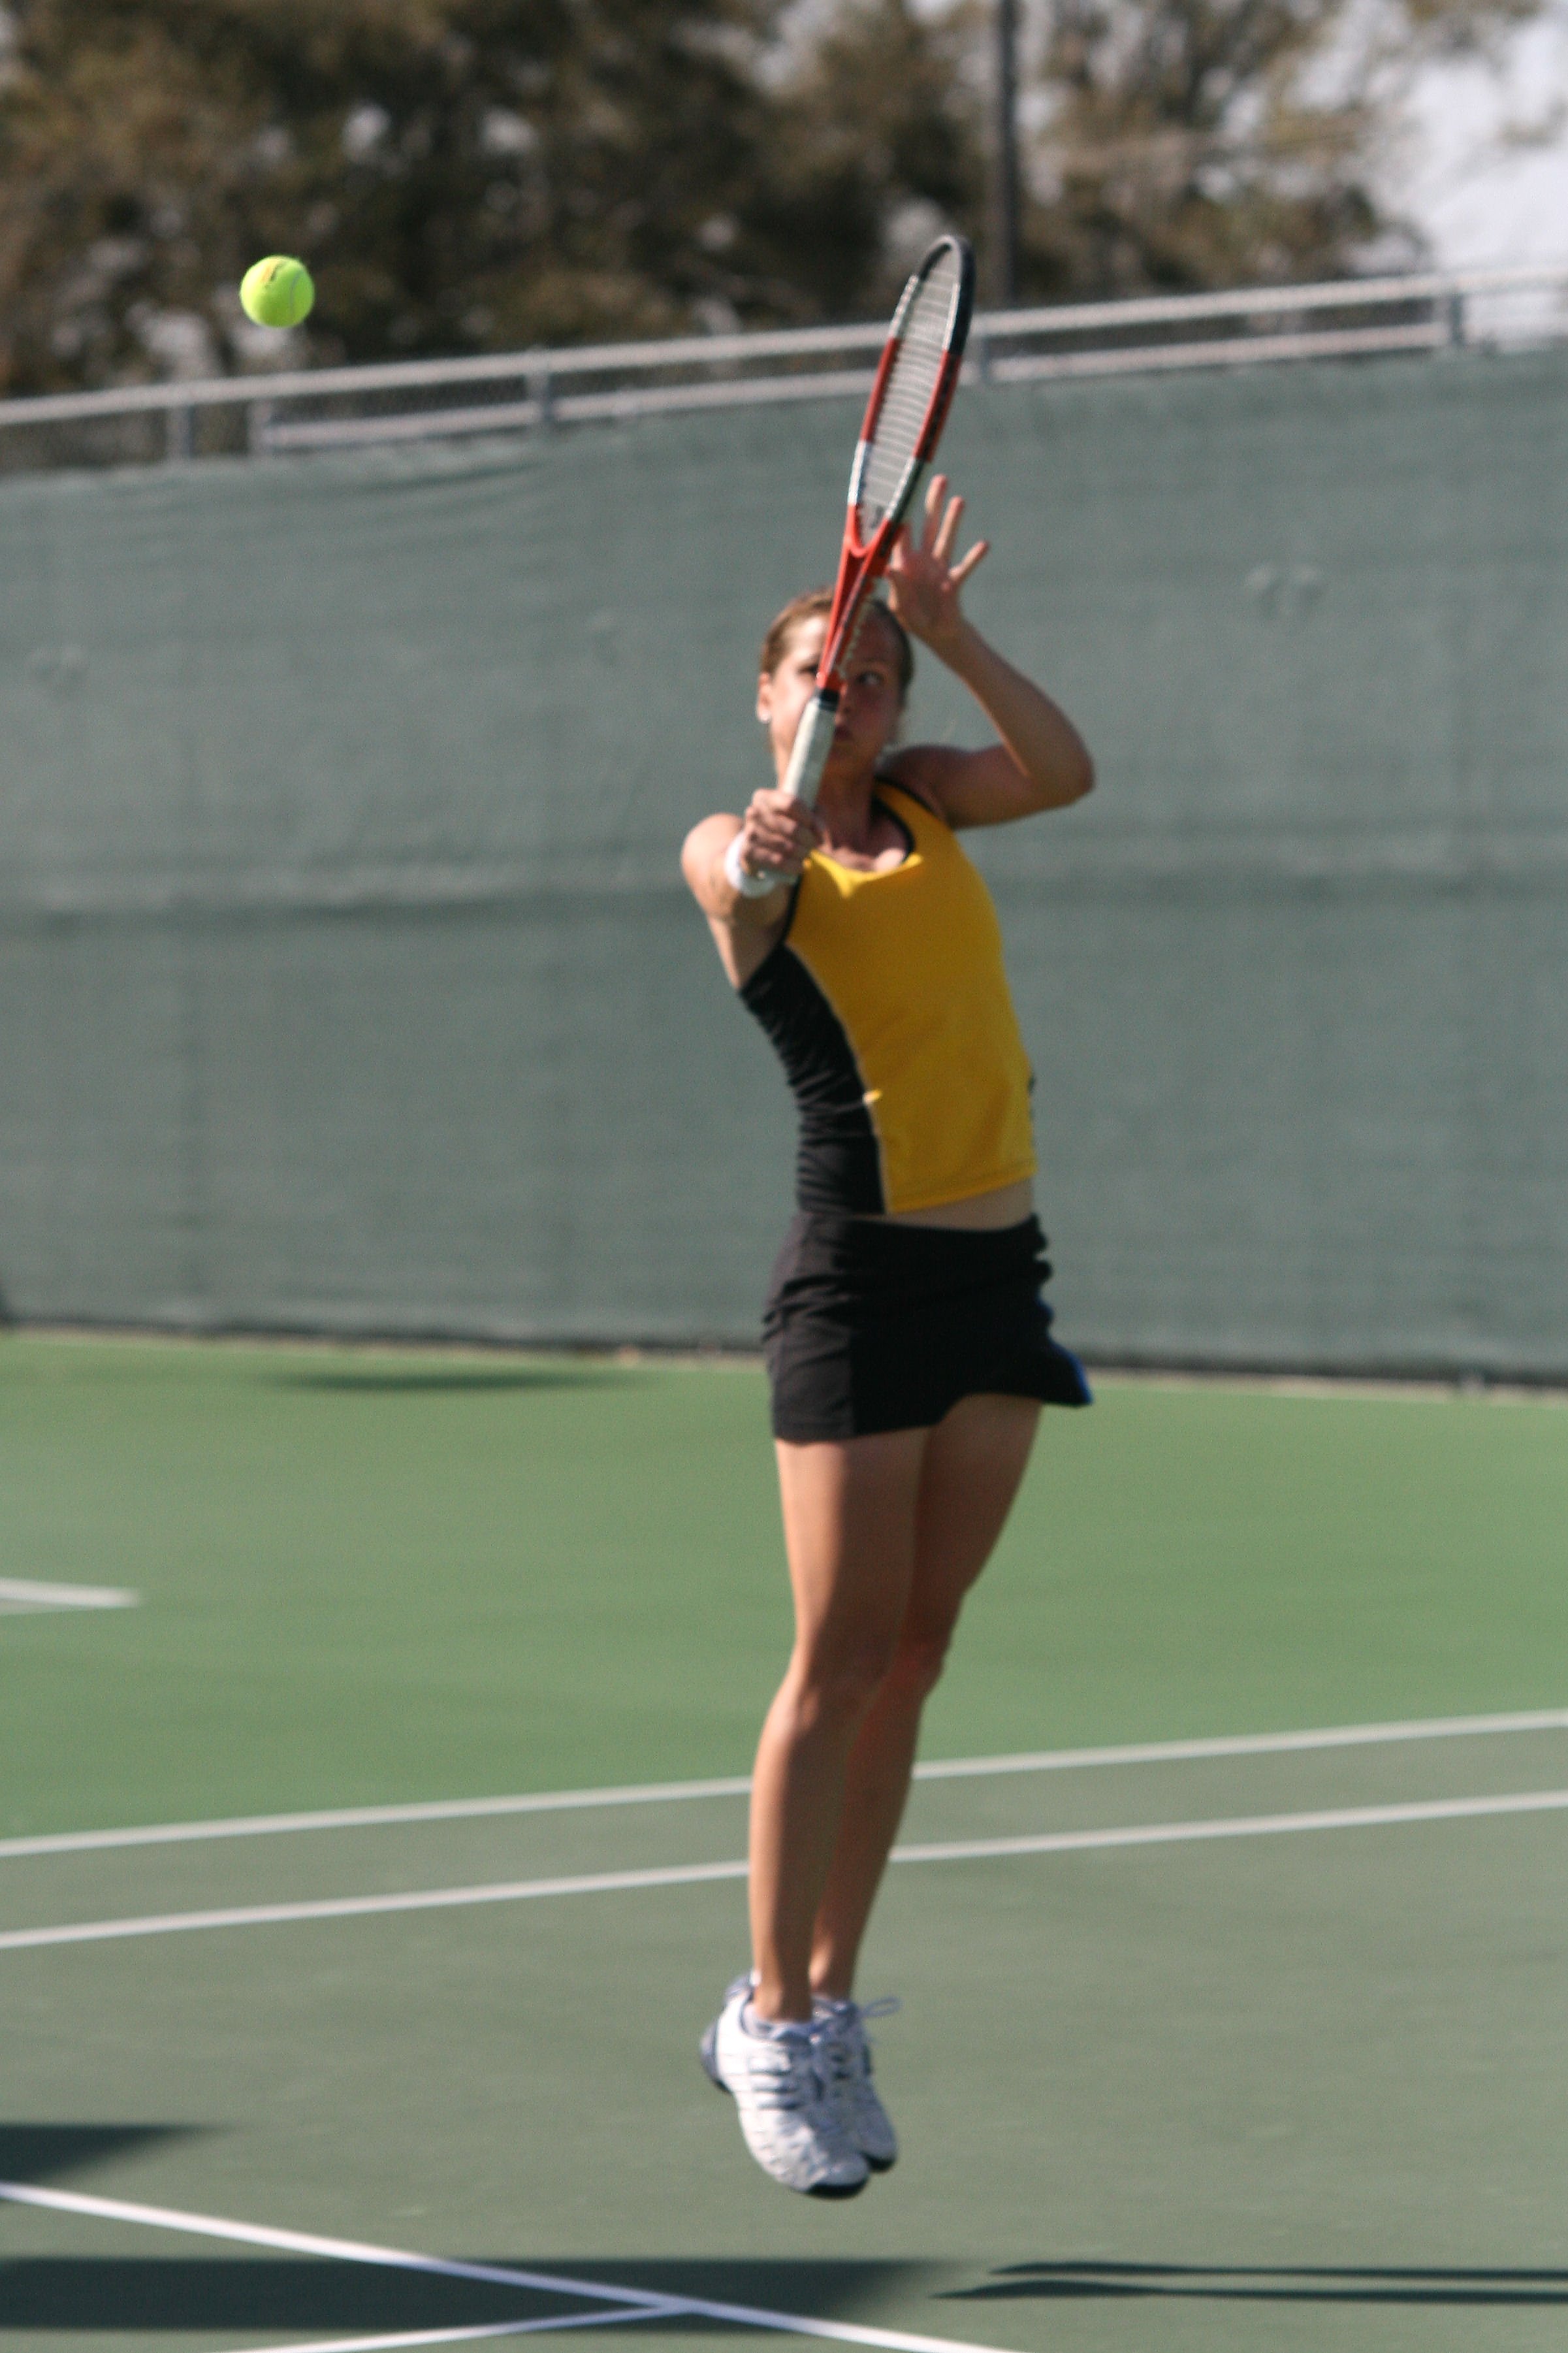 Urska Dobersek playing tennis